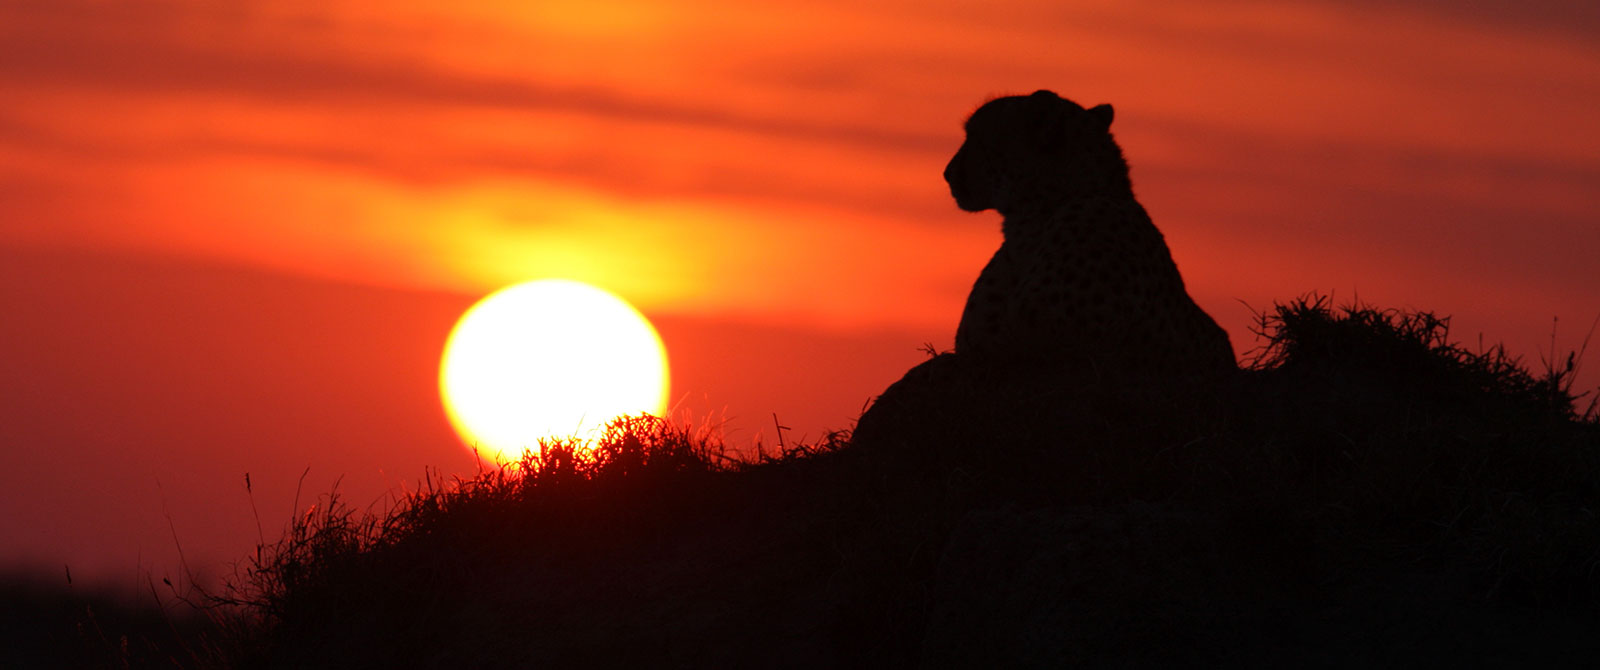 Cheetah at Sunset in the Sabi Sands - Big 5 Safari South Africa